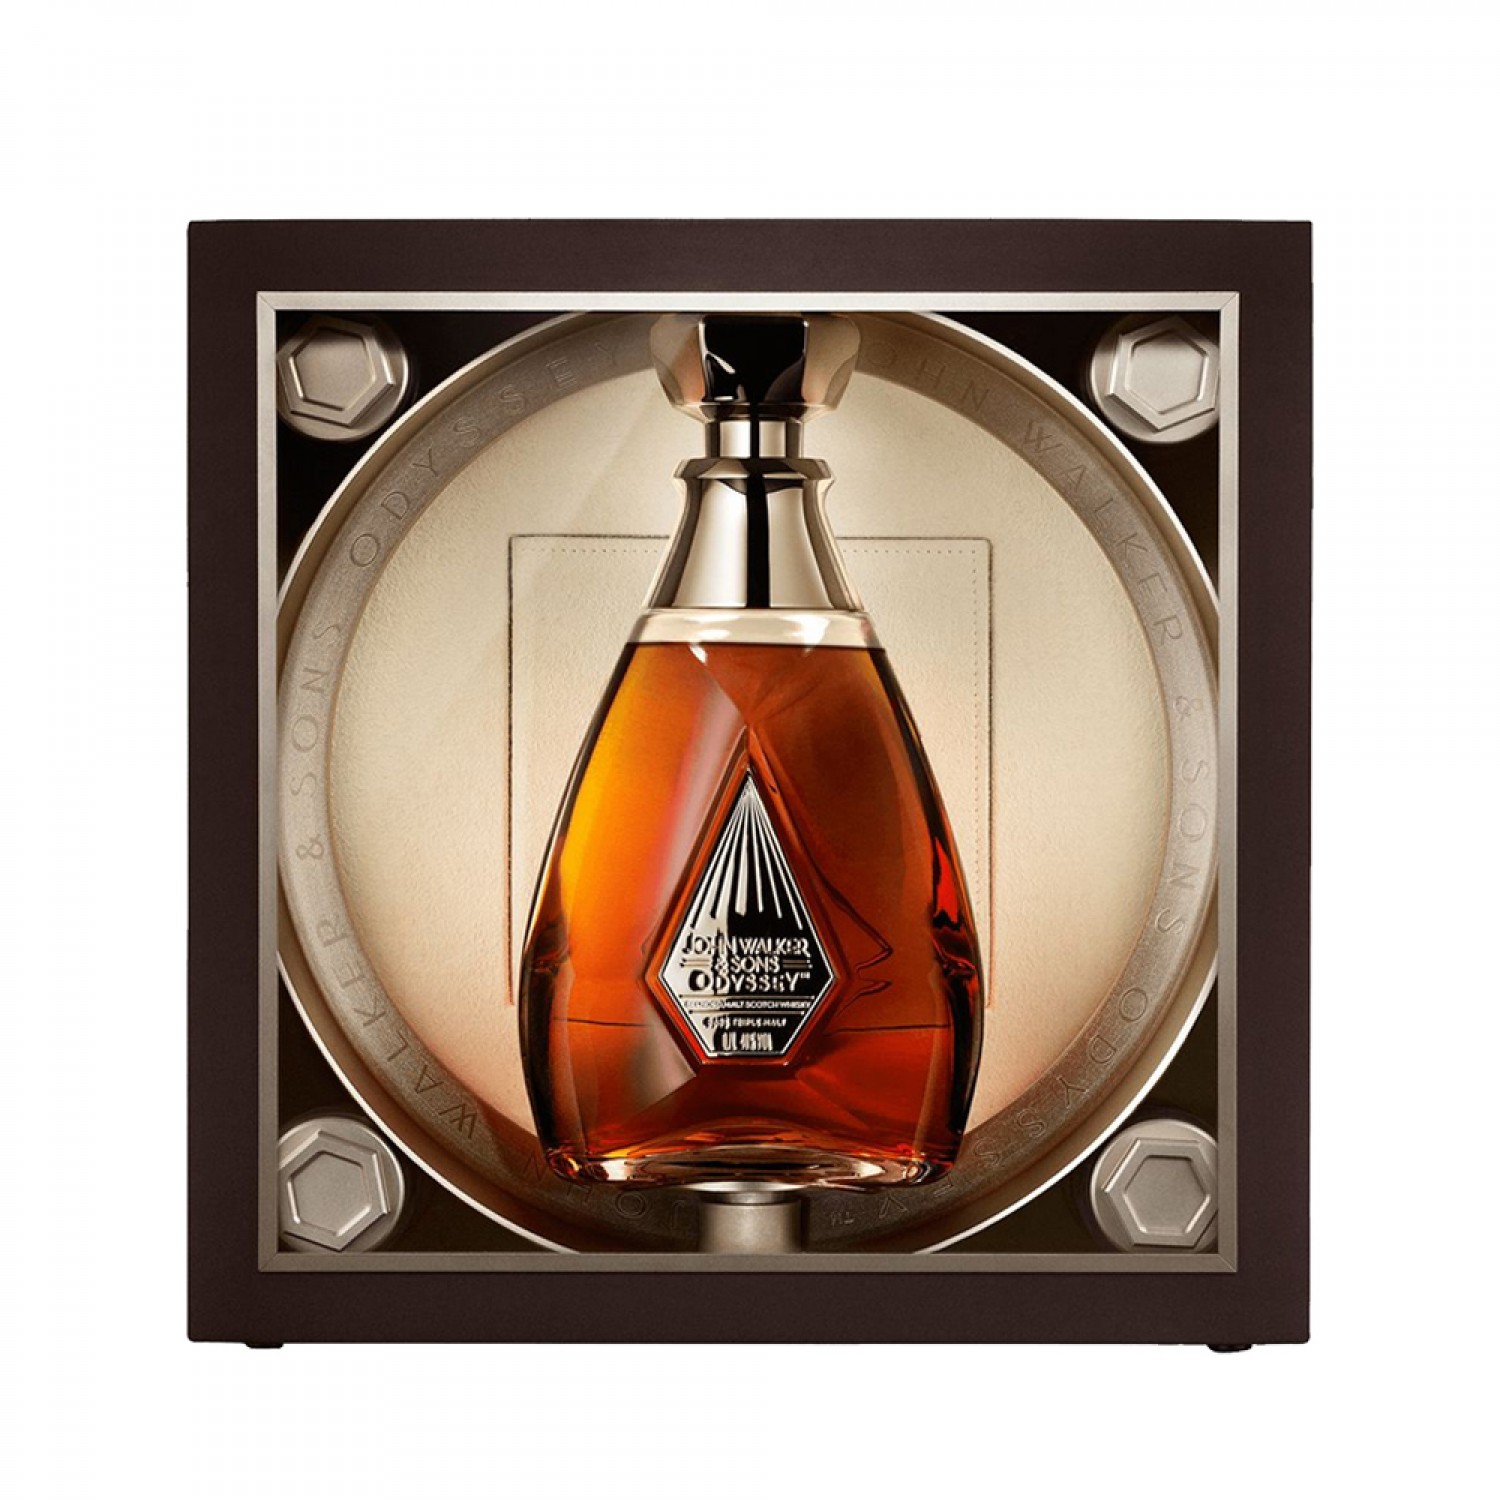 John Walker & Sons Odyssey Scotch Whisky 700ml